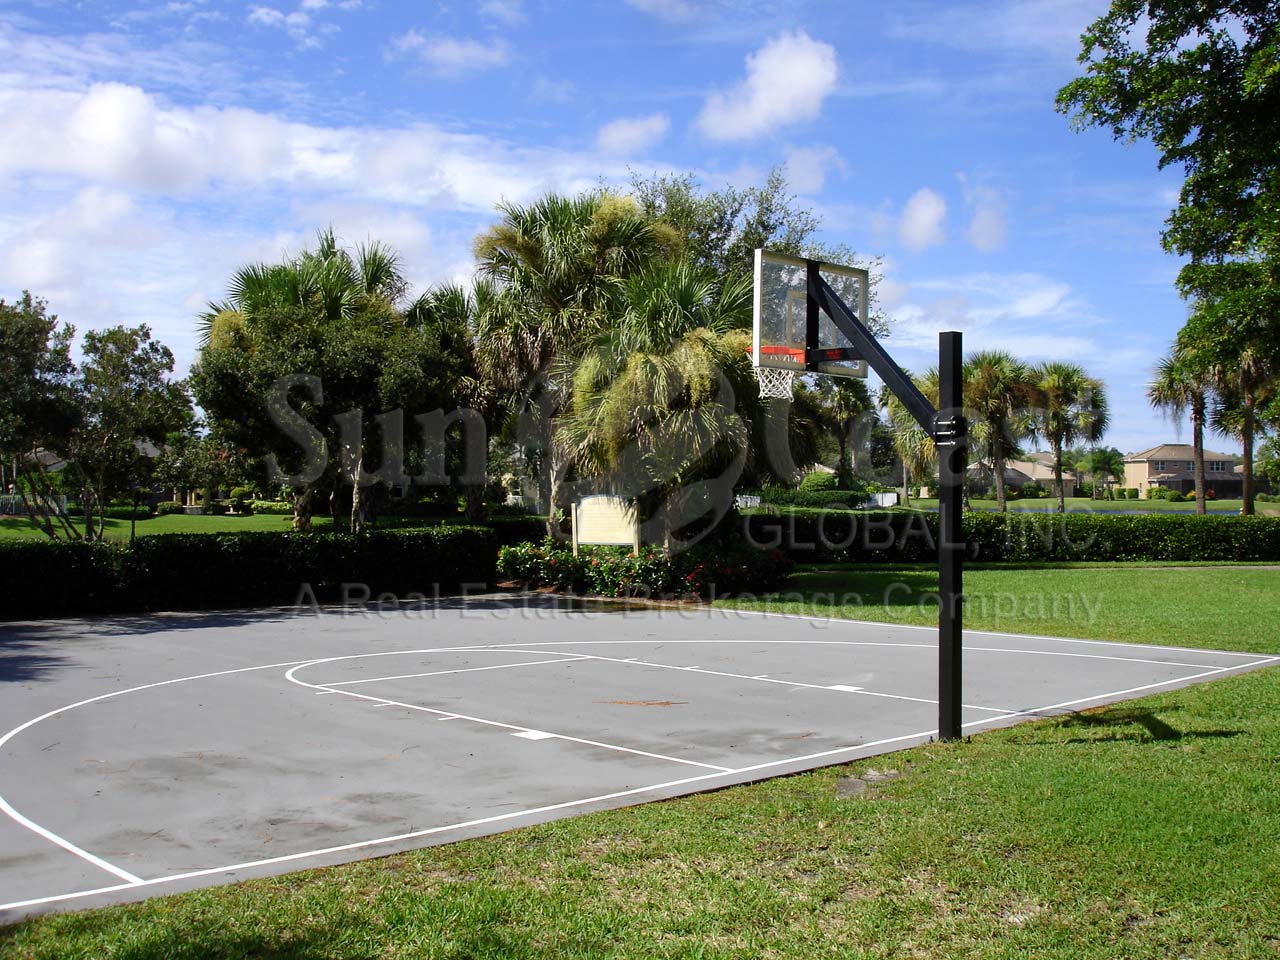 SATURNIA LAKES Basketball Court 